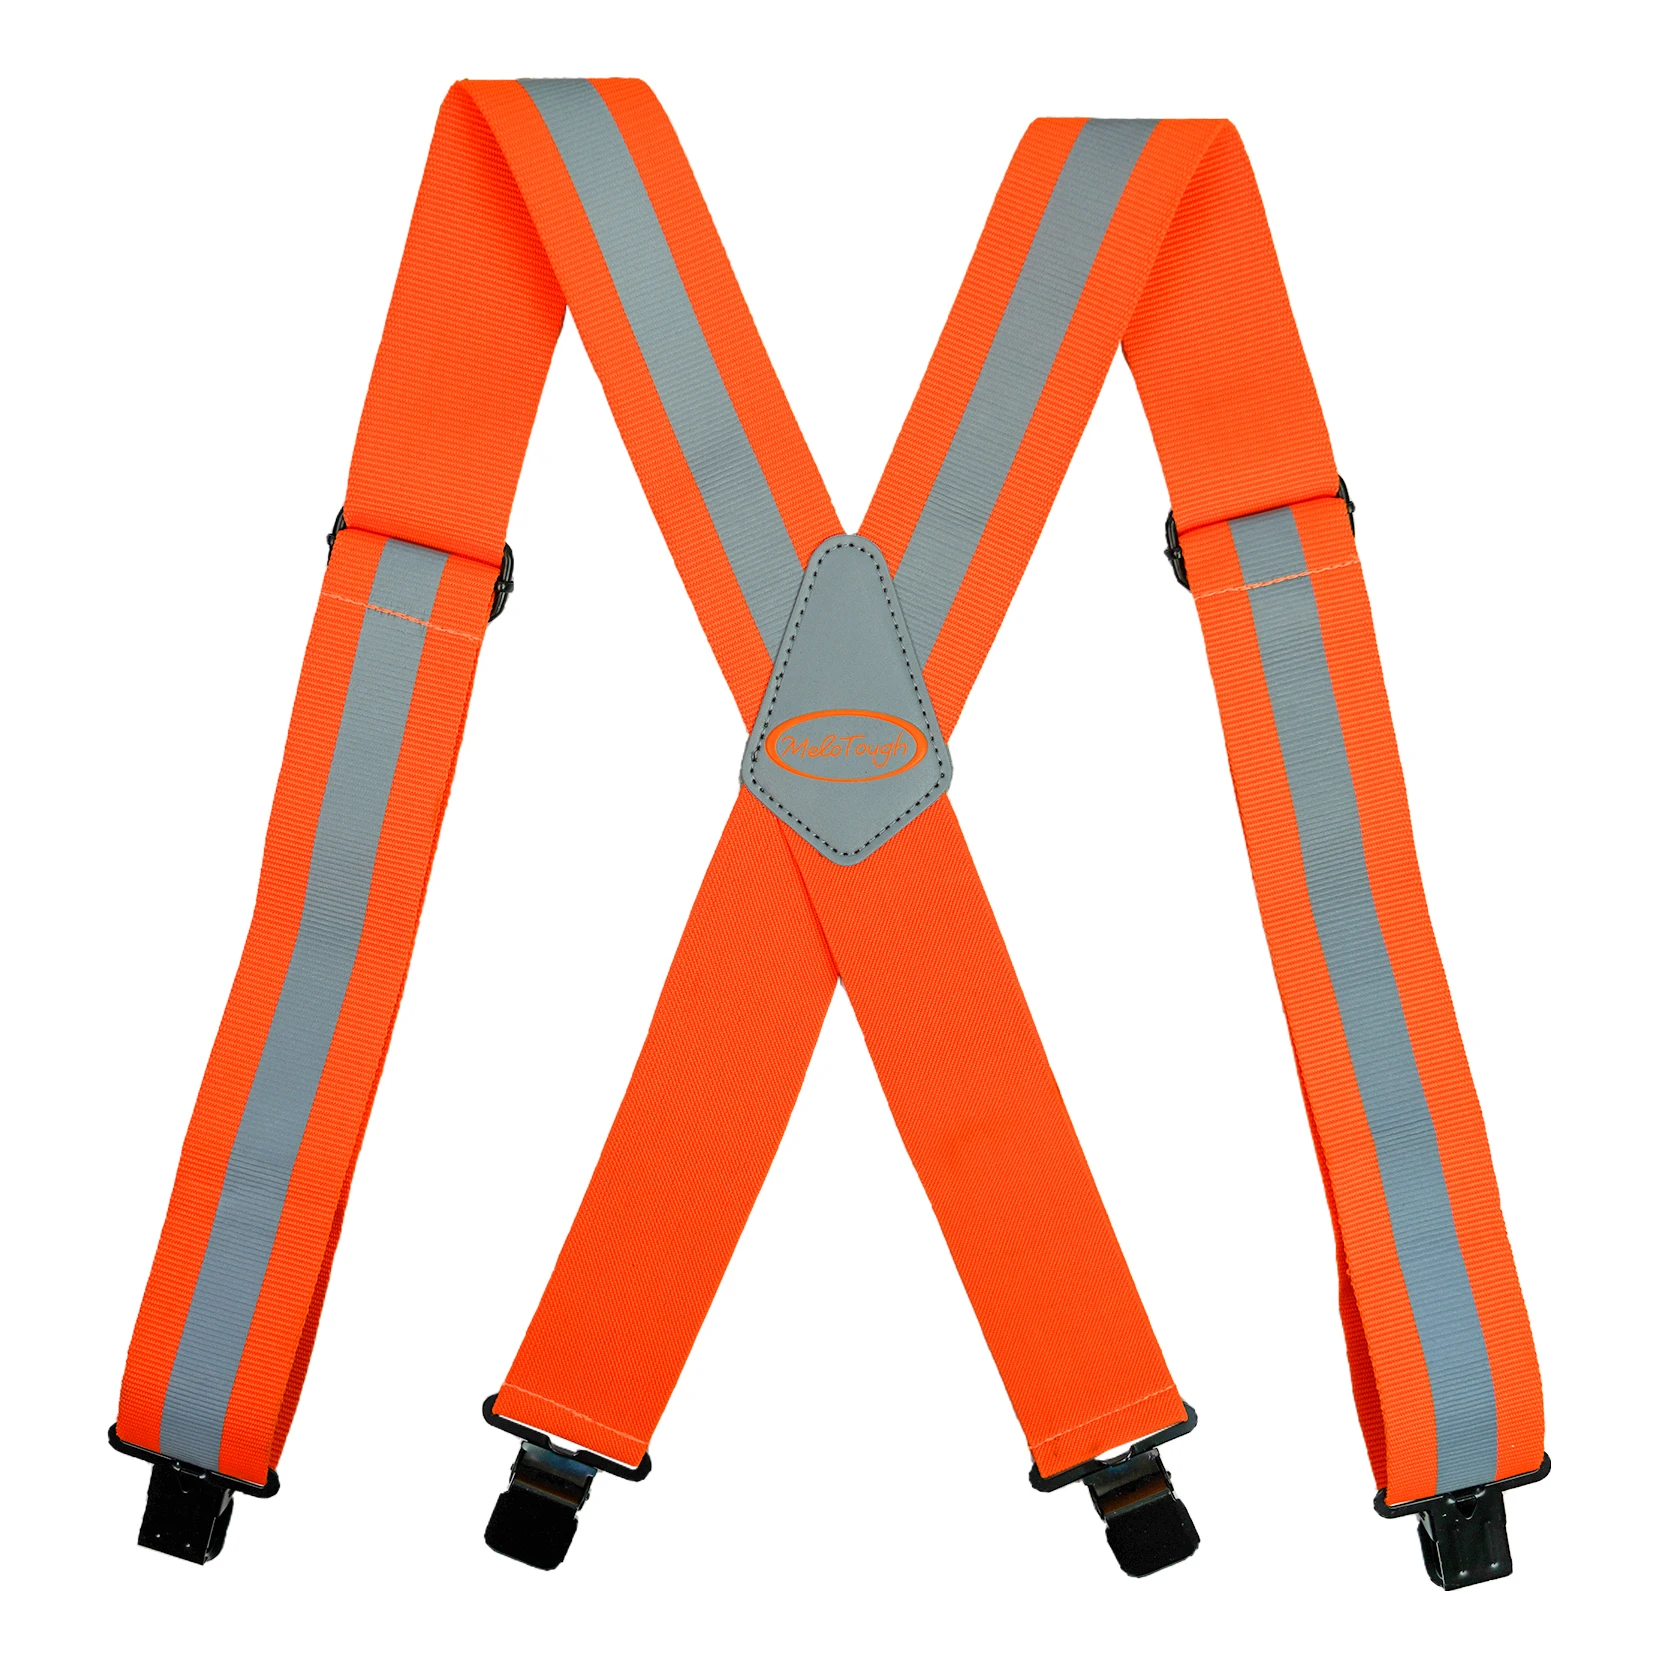 

Viz Suspenders With Hold Tool Tough Hi Up Suspenders Reflective Strip Safety Reflective Belt Suspenders|work Orange Melo